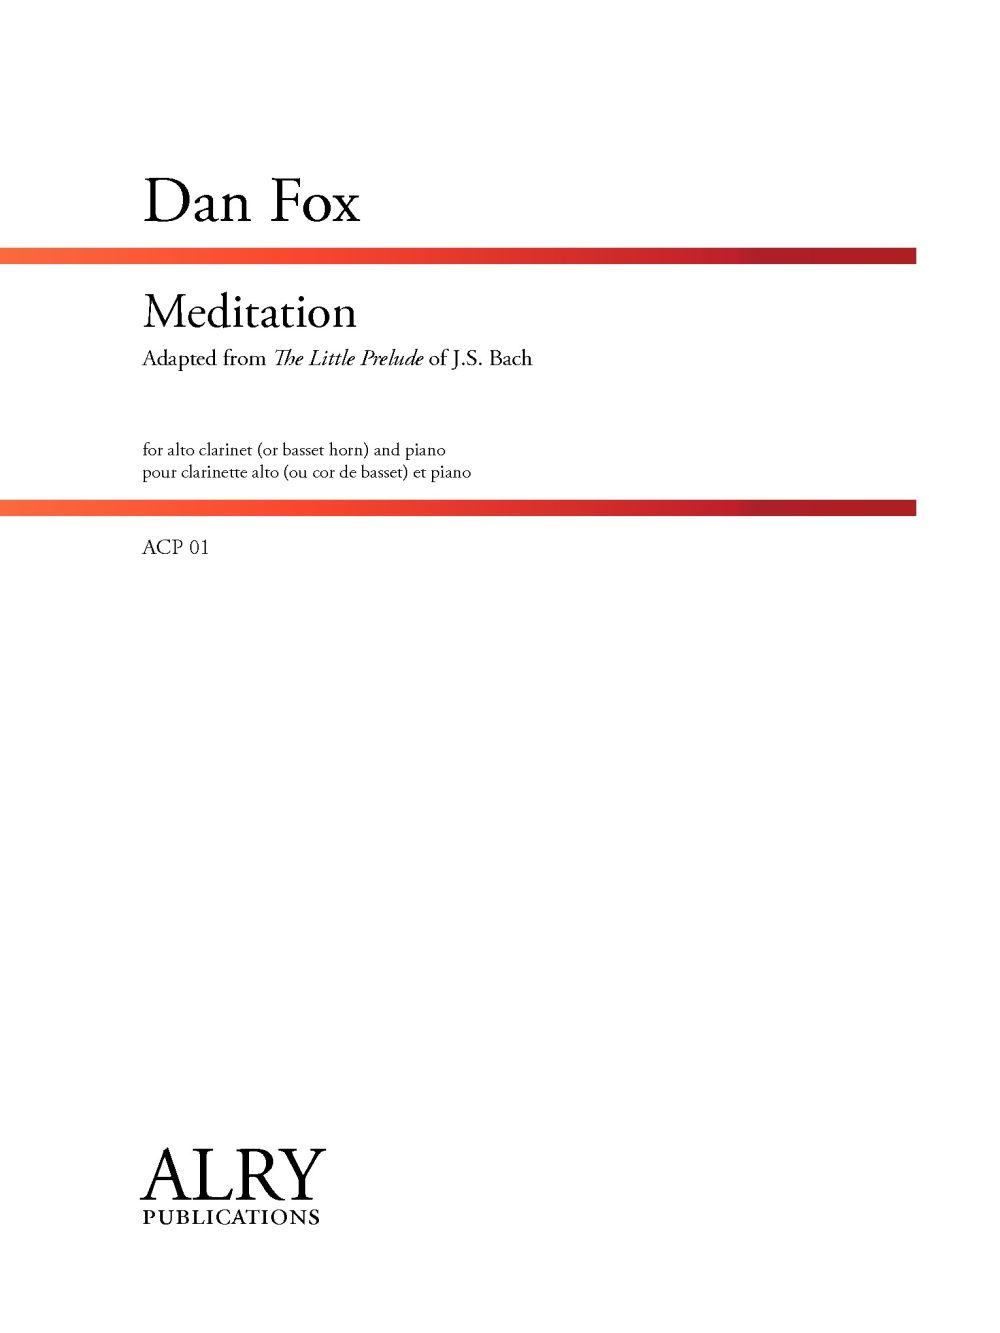 Meditation (FOX DAN)